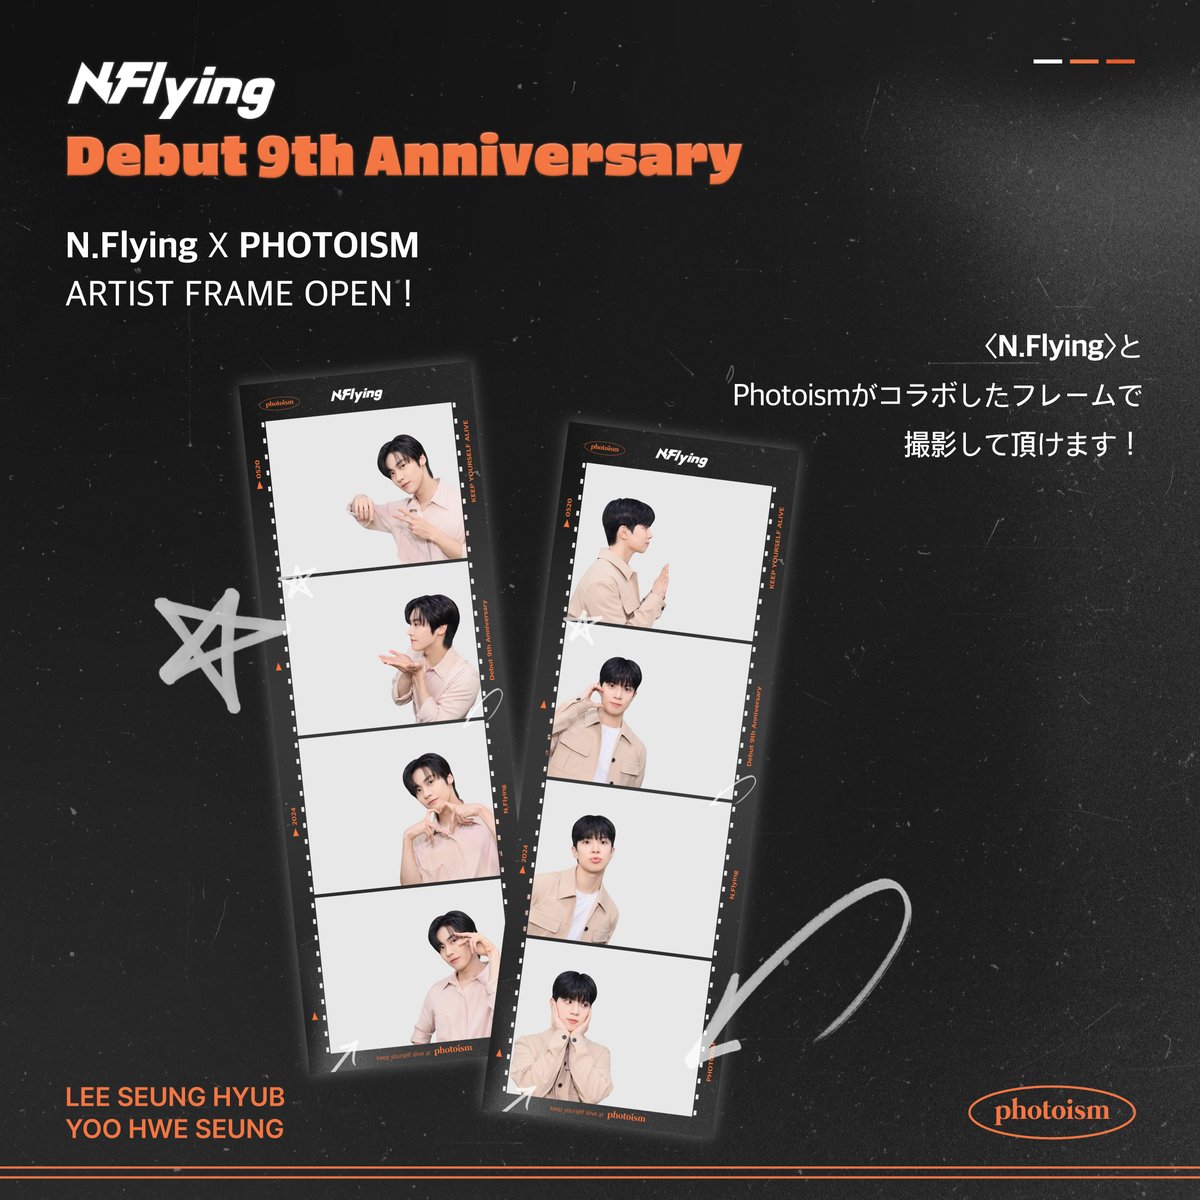 PHOTOISM X N.Flying
ARTIST FRAME OPEN !

「N.Flying」のデビュー9周年を記念して
アーティストフレームがオープン致します。

5月17日から5月31日まで
Photoism全店舗で撮影をお楽しみ頂けます！

* 「東京タワー店」、「ポケユニハラジュク店」ではアーティストフレームの撮影は行えません。